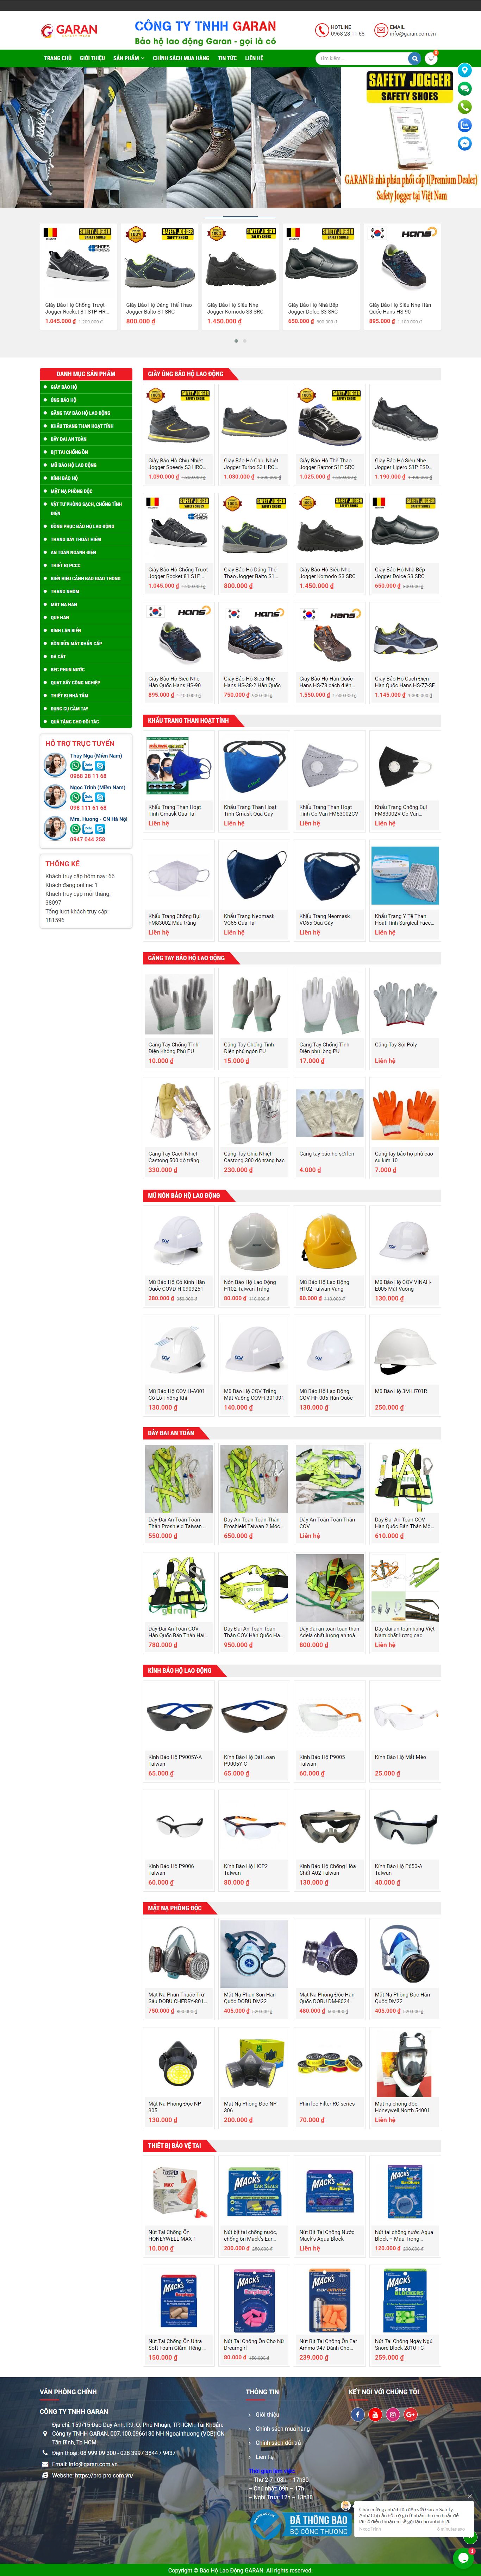 Thiết kế Website giày bảo hộ - pro-pro.com.vn